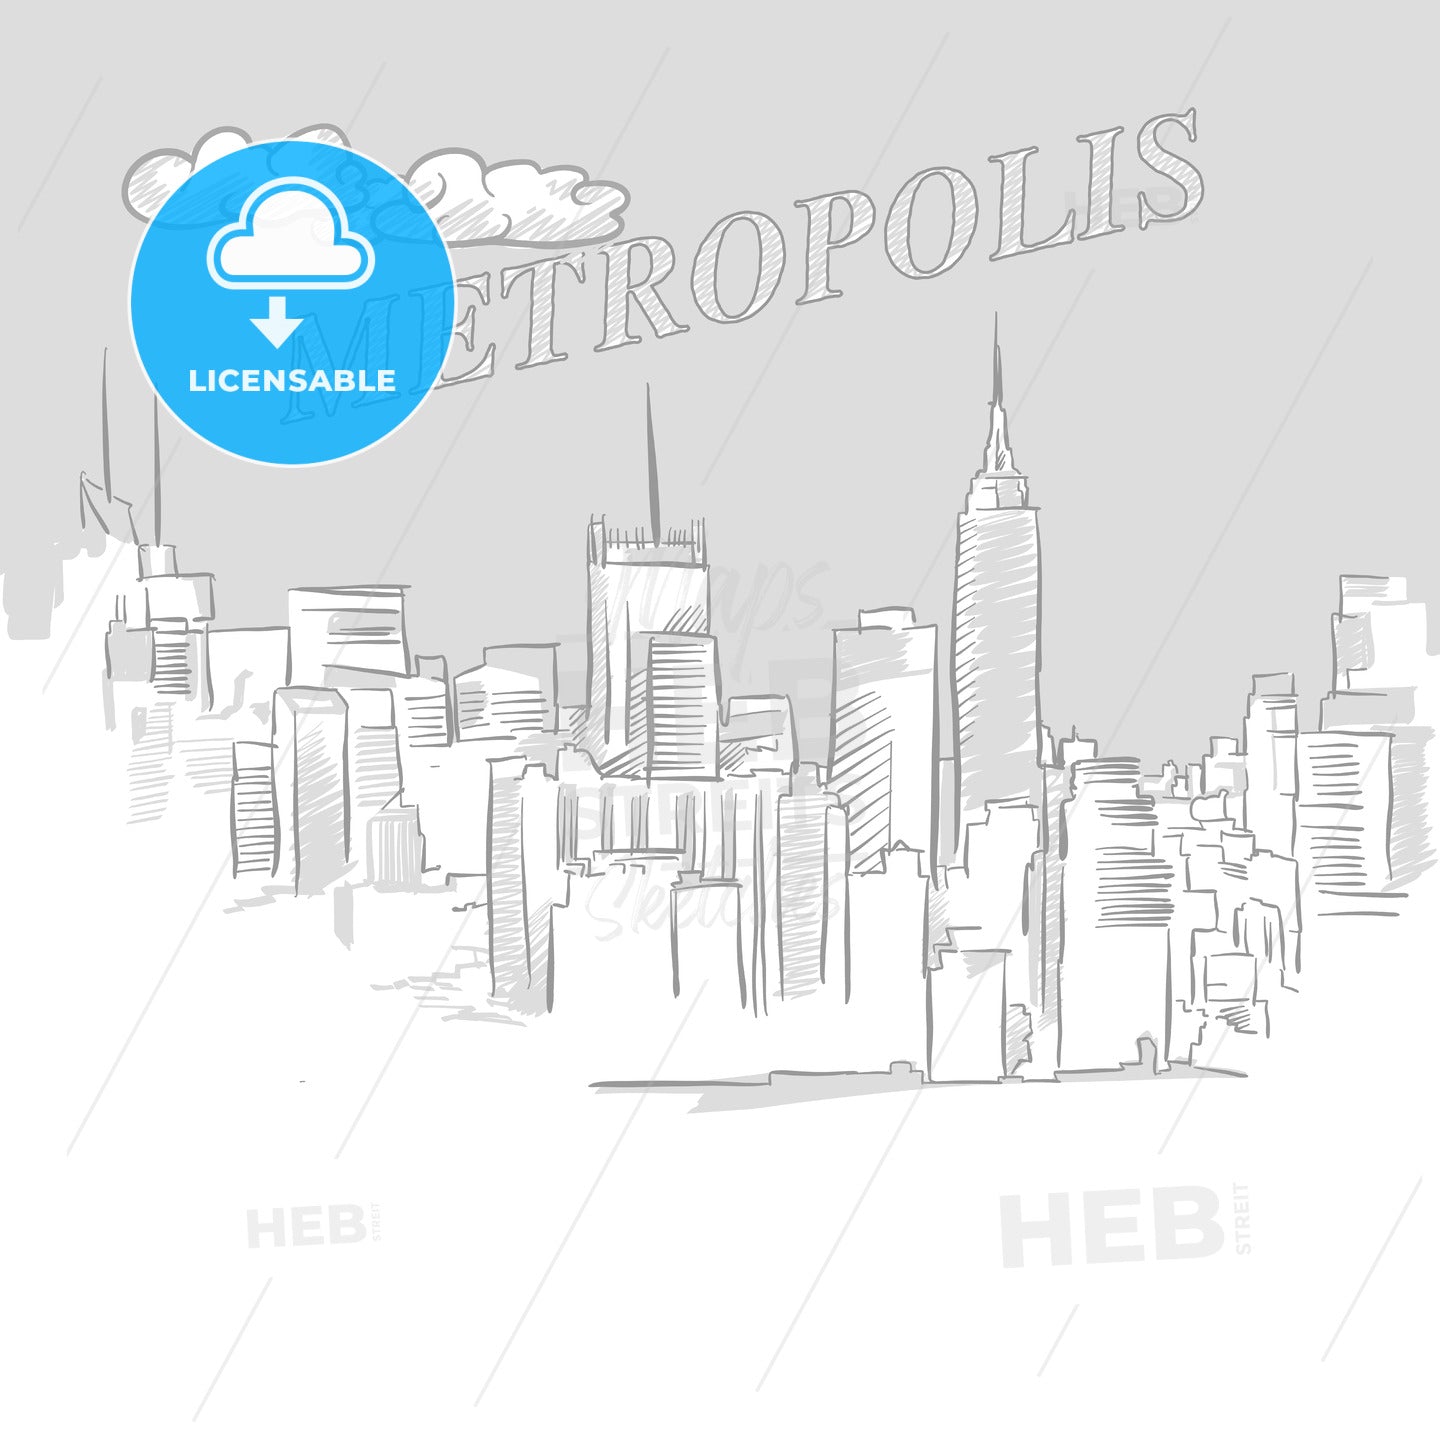 Metropolis travel marketing cover – instant download